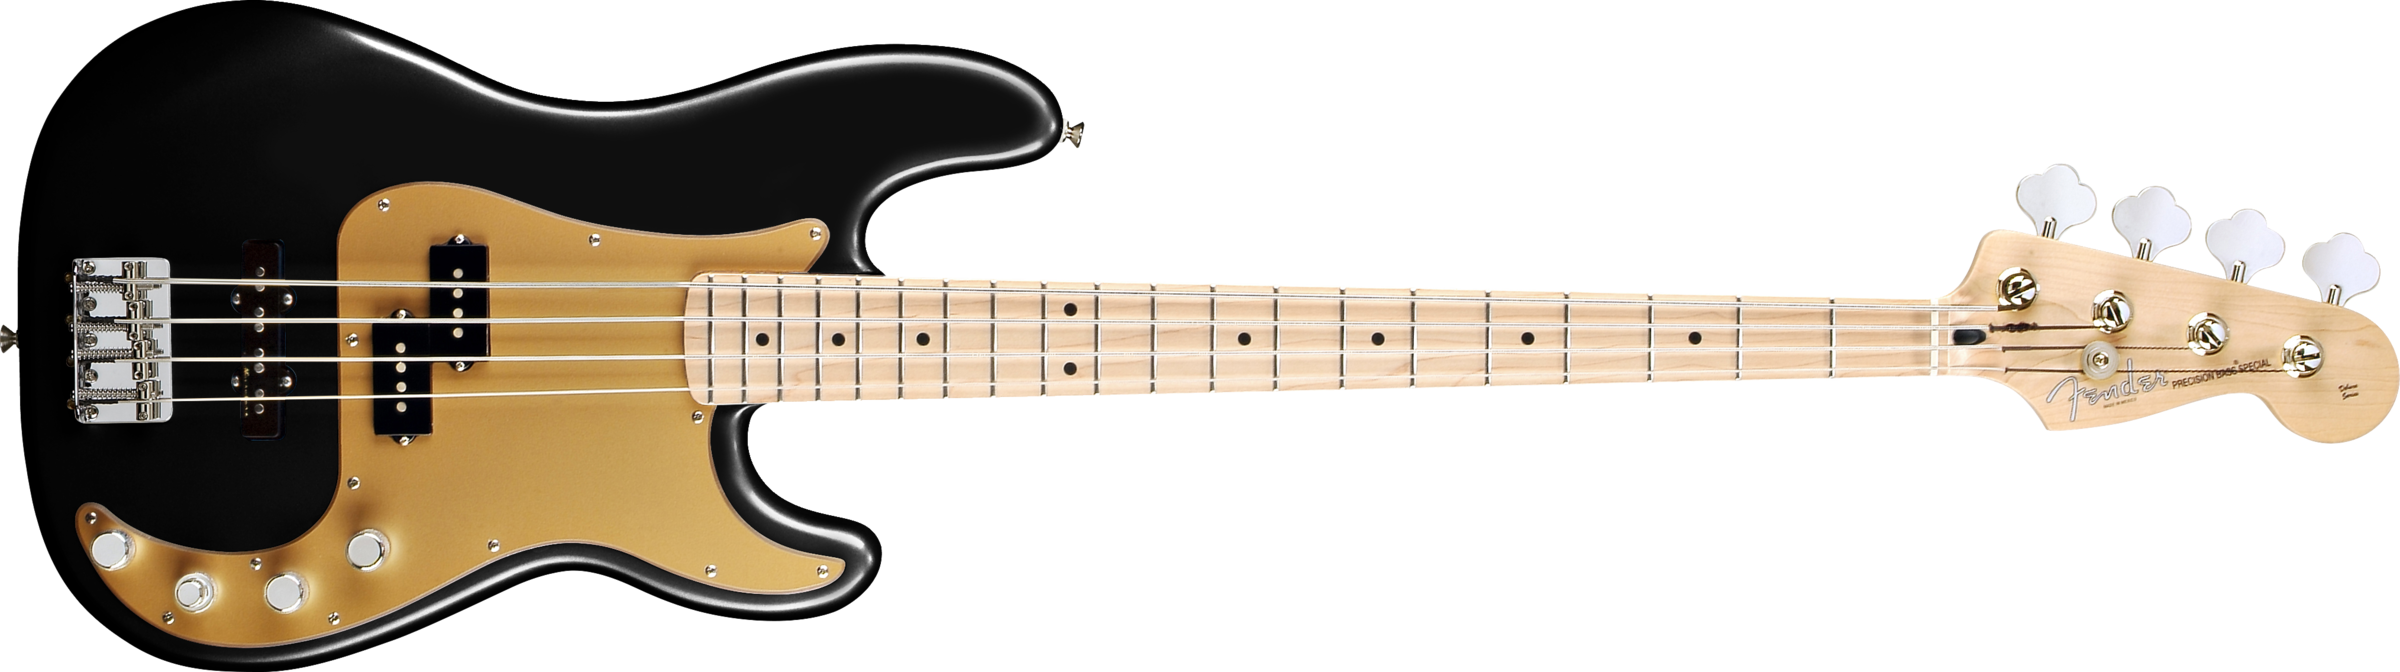 Bass Guitar Transparent - Bass Fender Precision Black (2400x672), Png Download